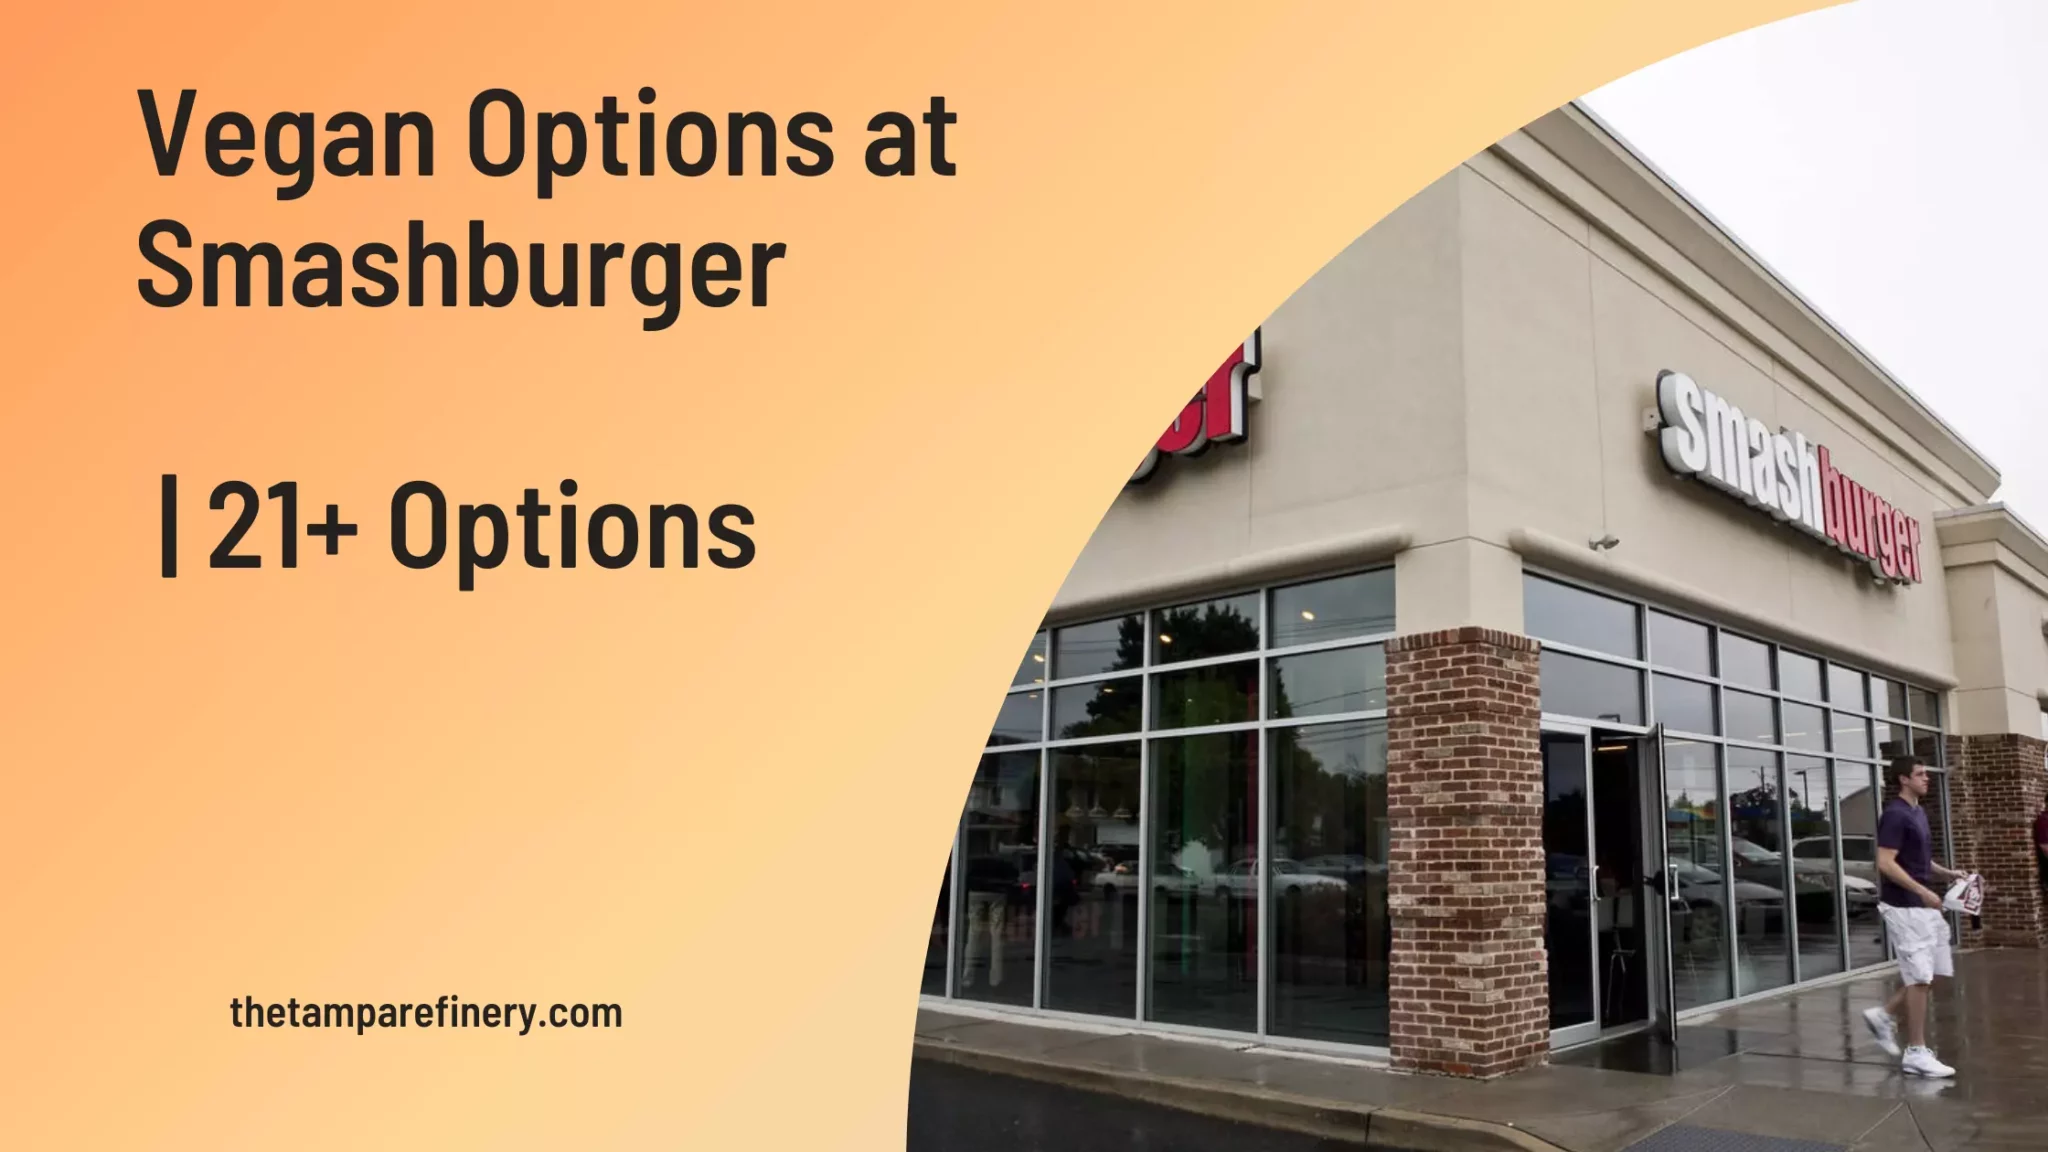 Vegan Options at Smashburger